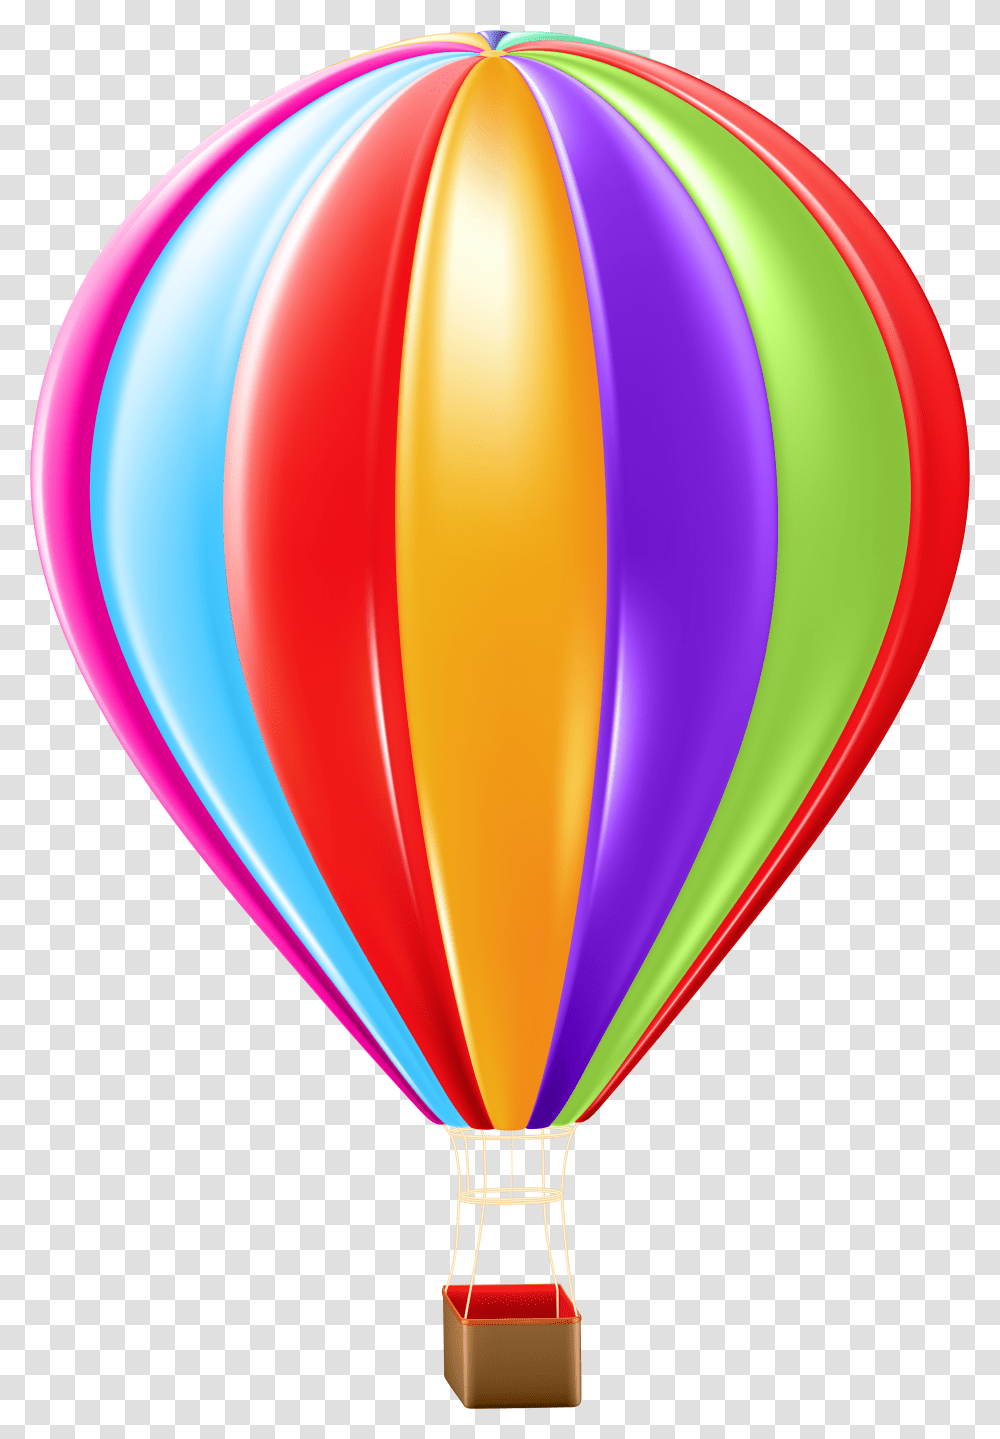 Hot Air Balloon Clip Art Image Balloons In Air Clipart Transparent Png